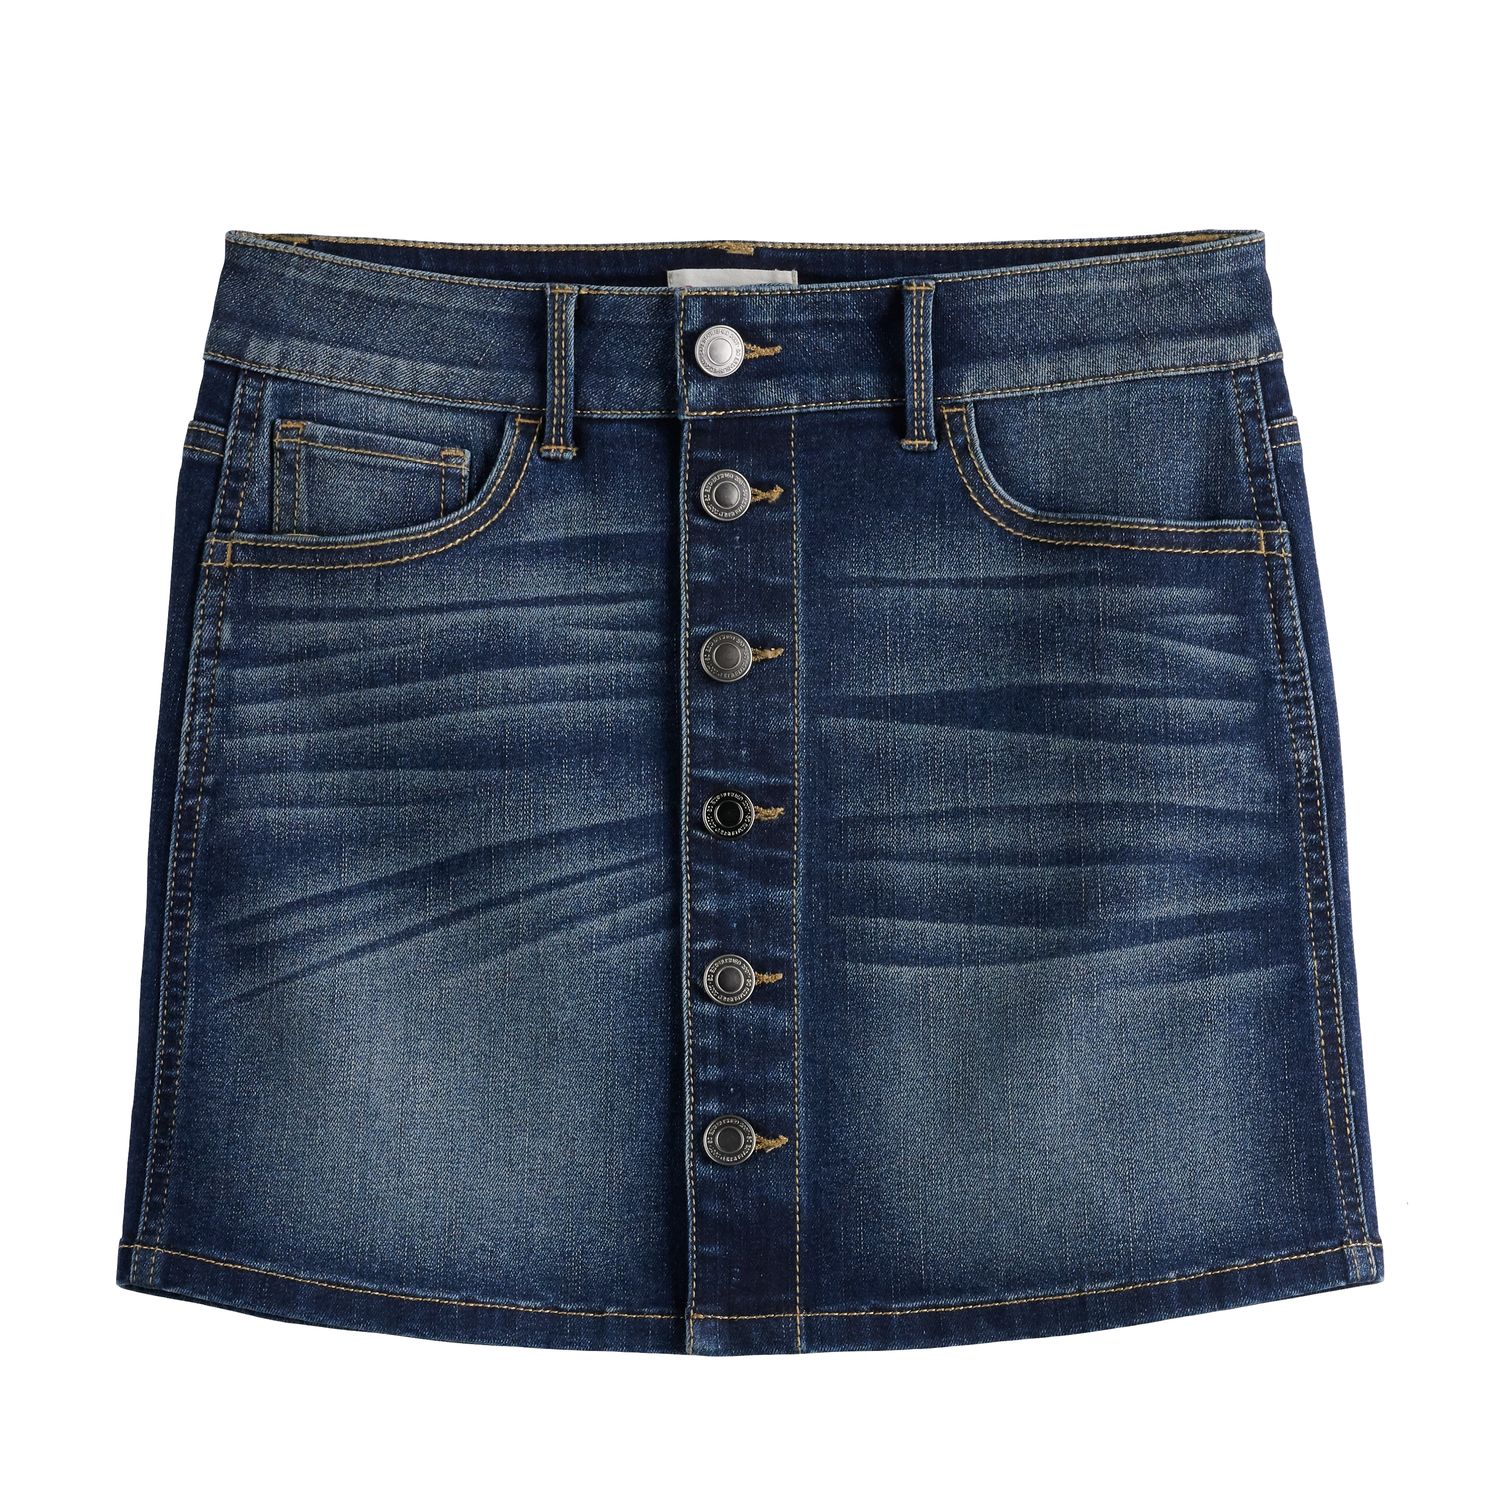 jean skirt size 16